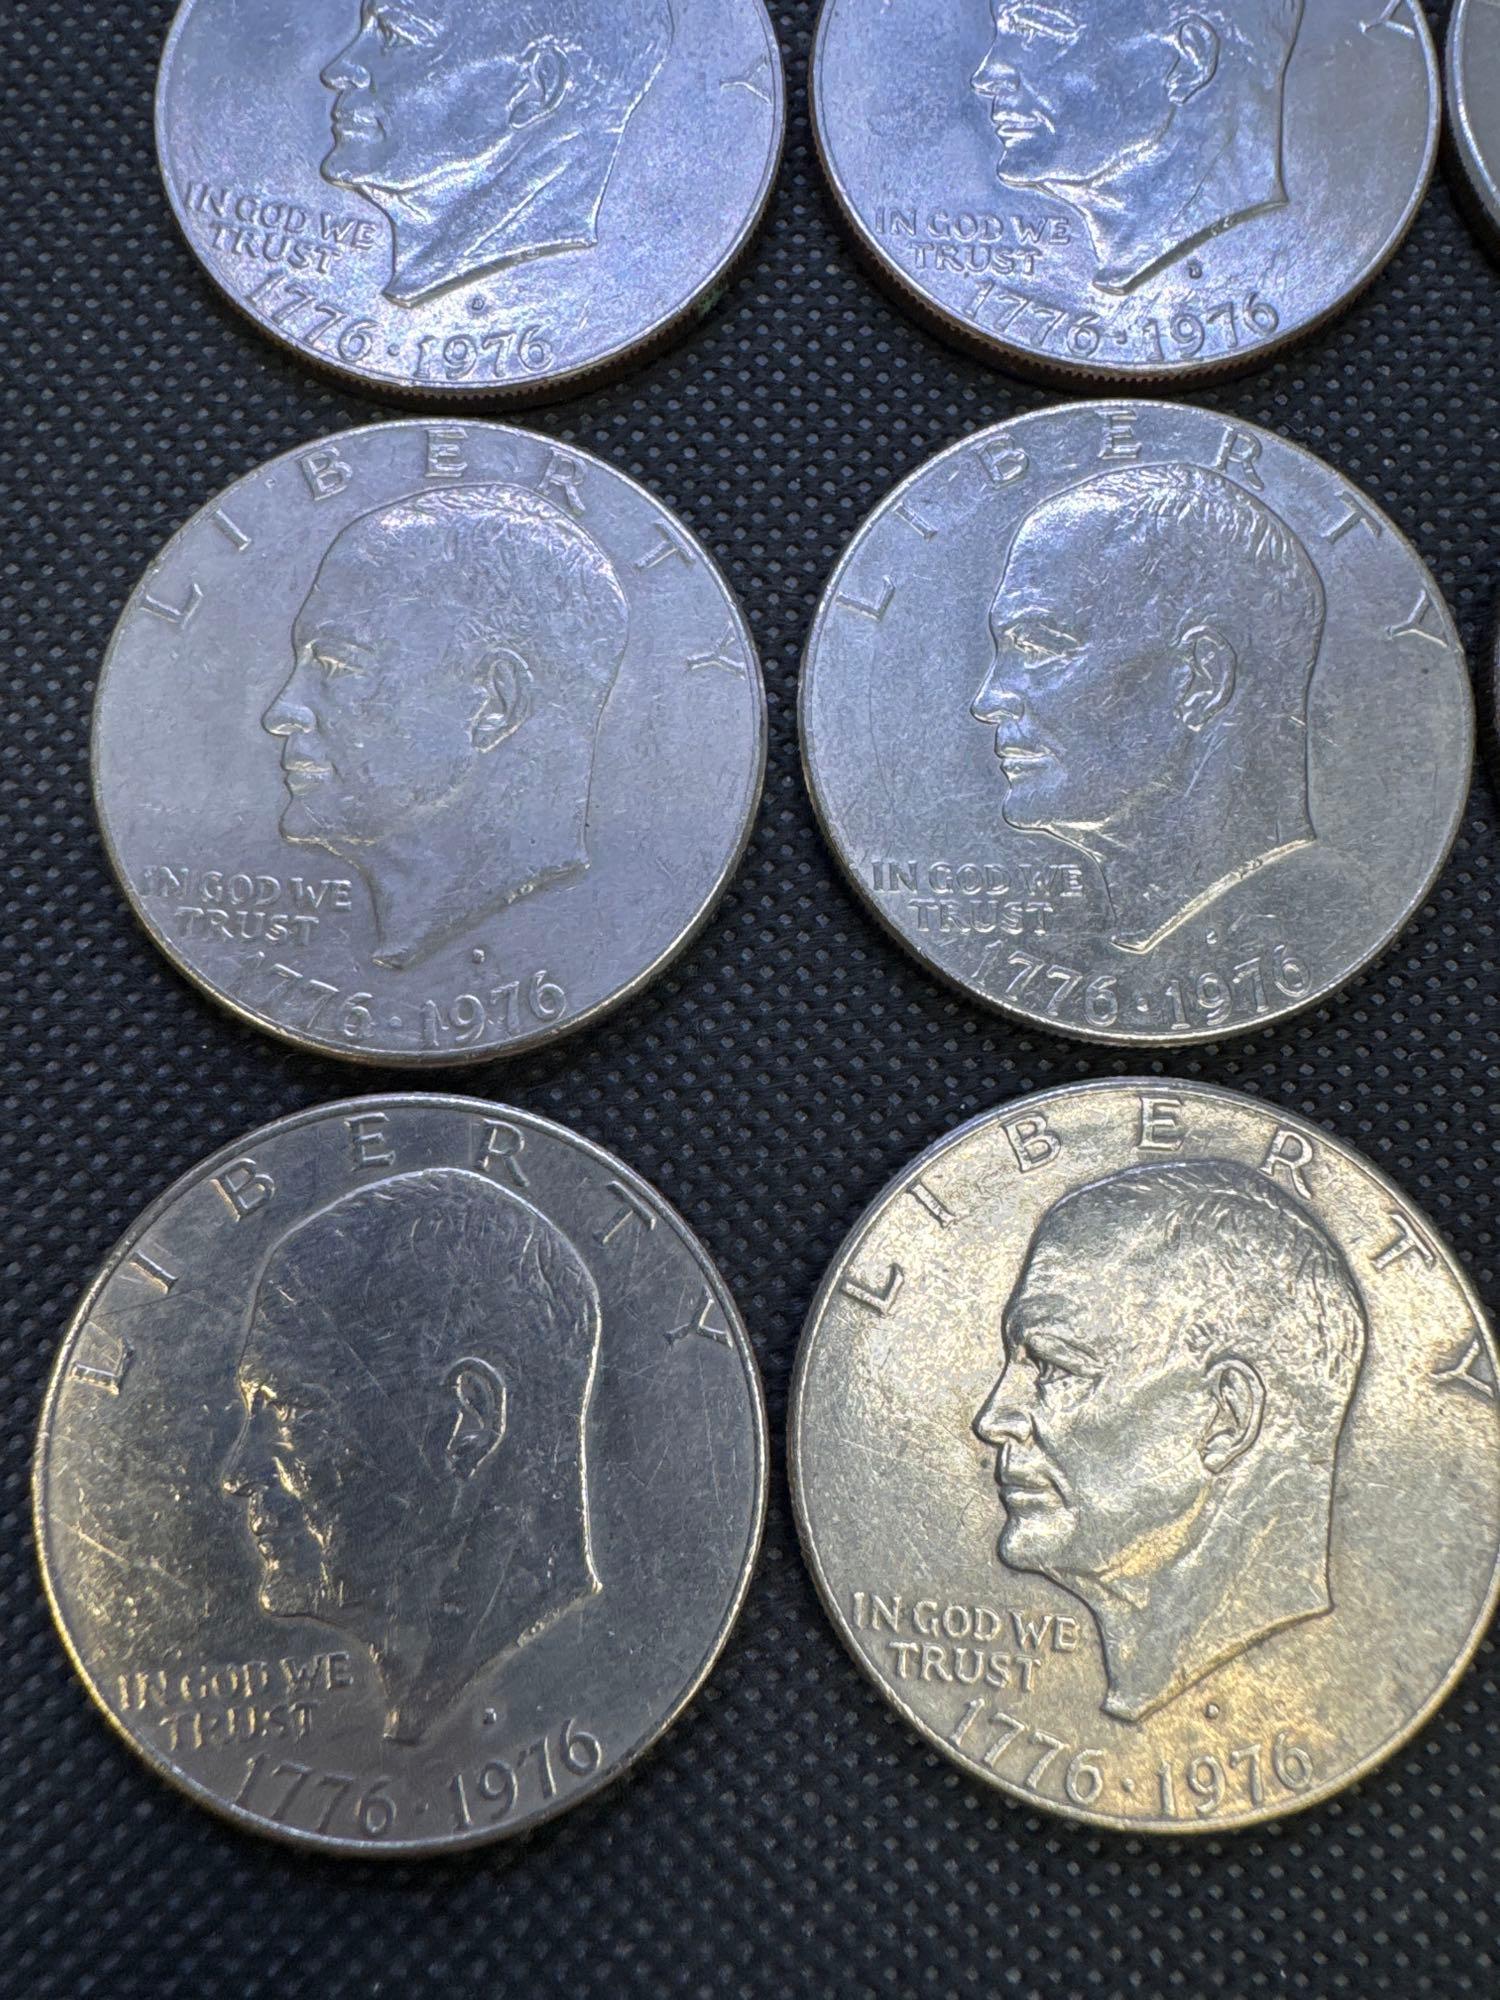 20 bicentennial Eisenhower dollars 451.0 Grams